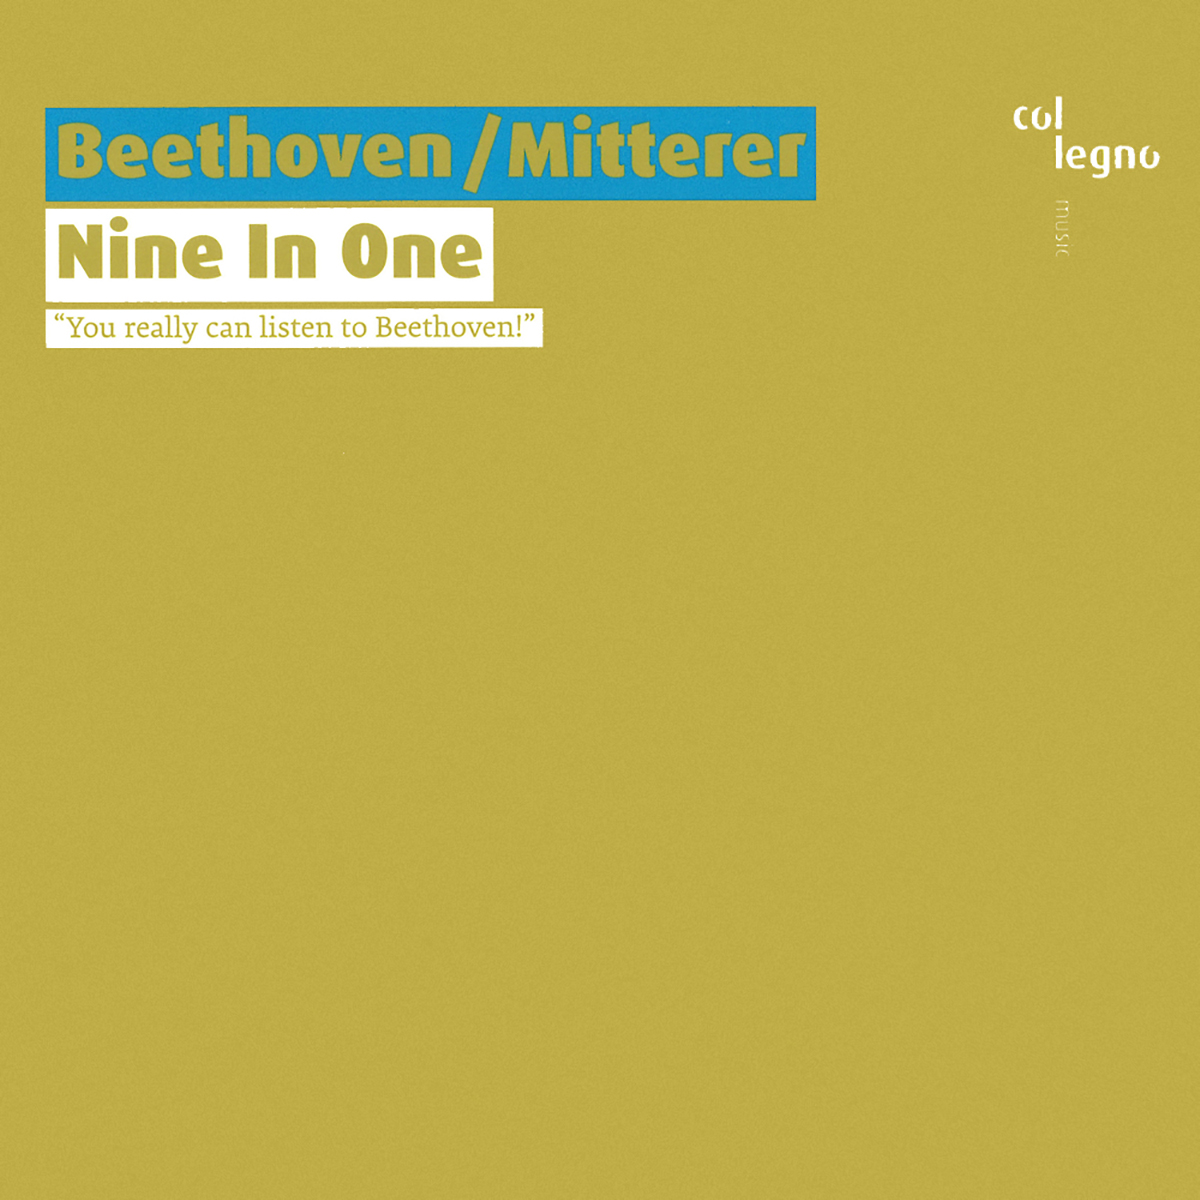 Beethoven Mitterer - Nine in one